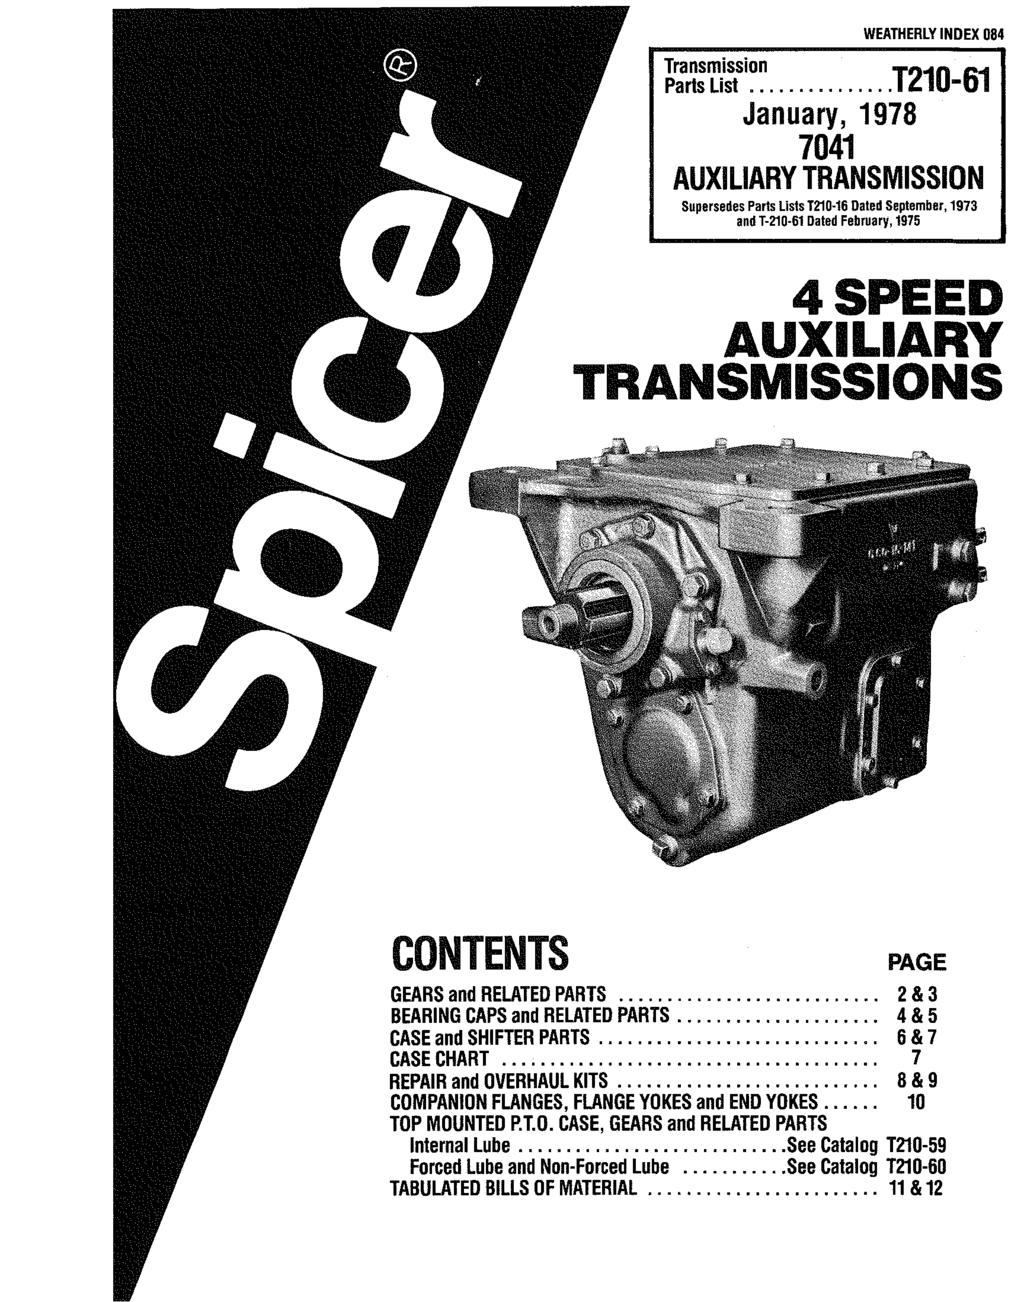 WEATHERLY INDEX 08 Transmission Parts List.